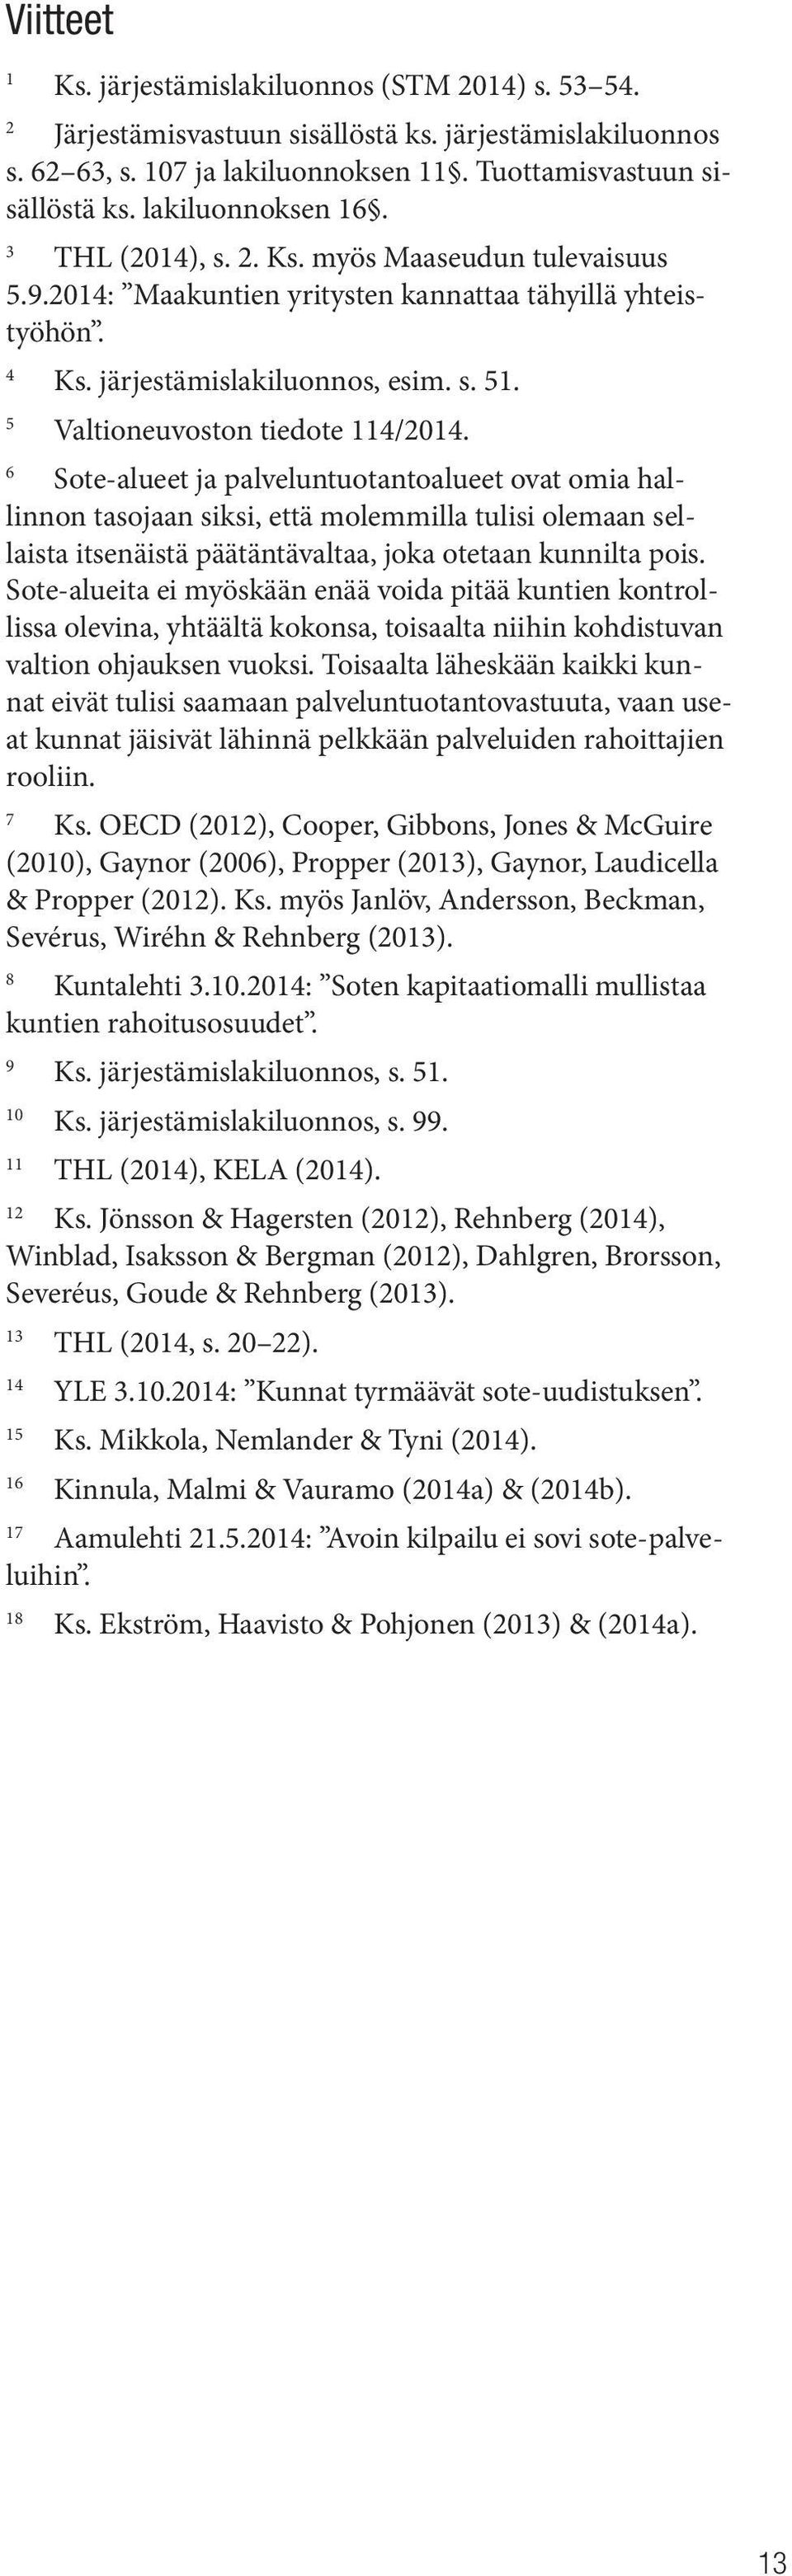 5 Valtioneuvoston tiedote 114/2014.